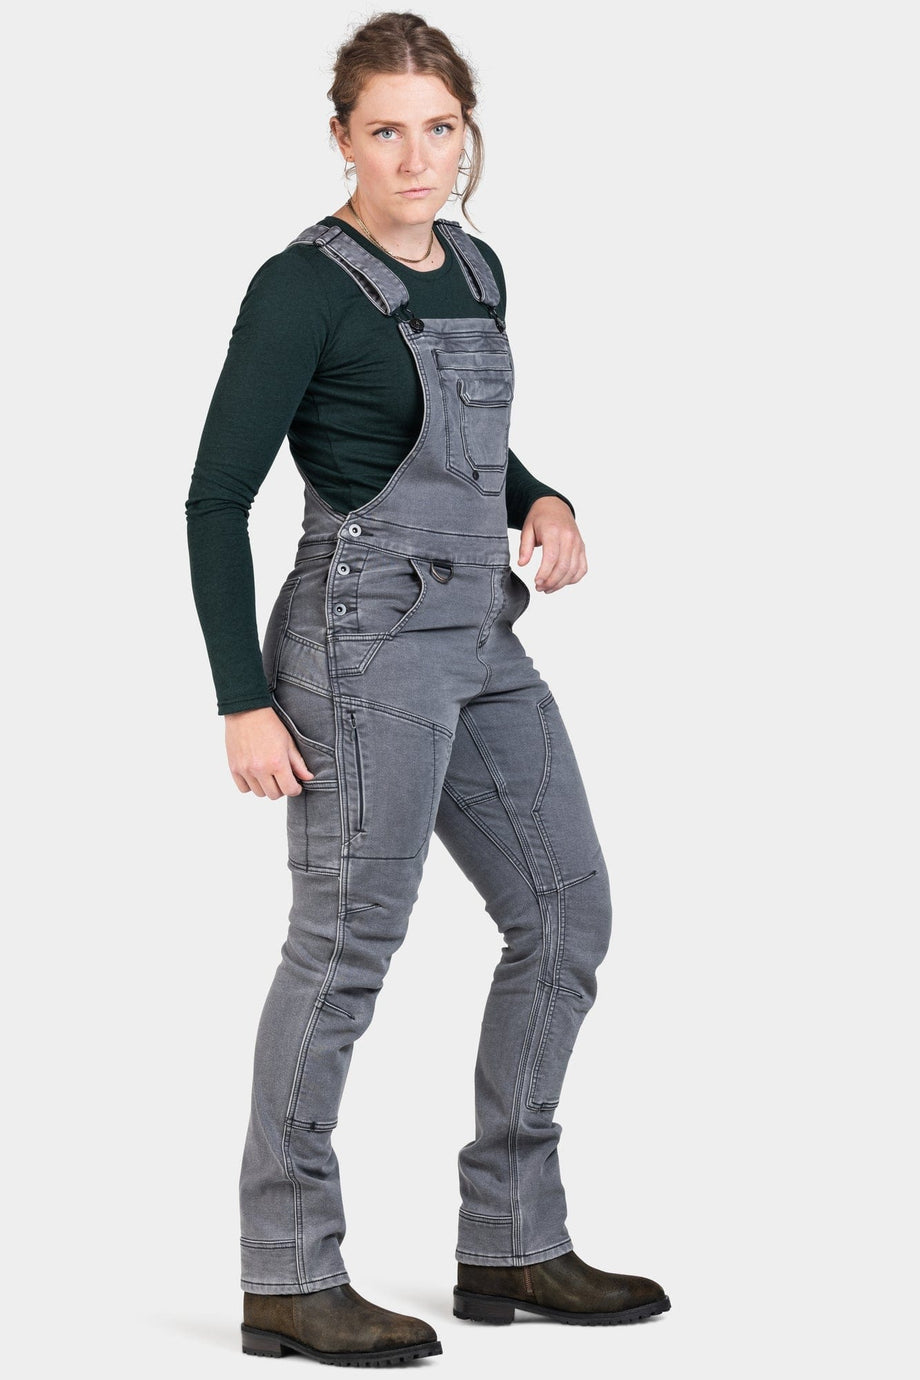 LookbookStore Women's Adjustable Straps Jumpsuit with Pockets Casual Stretch  Denim Bib Overalls Size L Size 12 Size 14 Deep Blue - Walmart.com